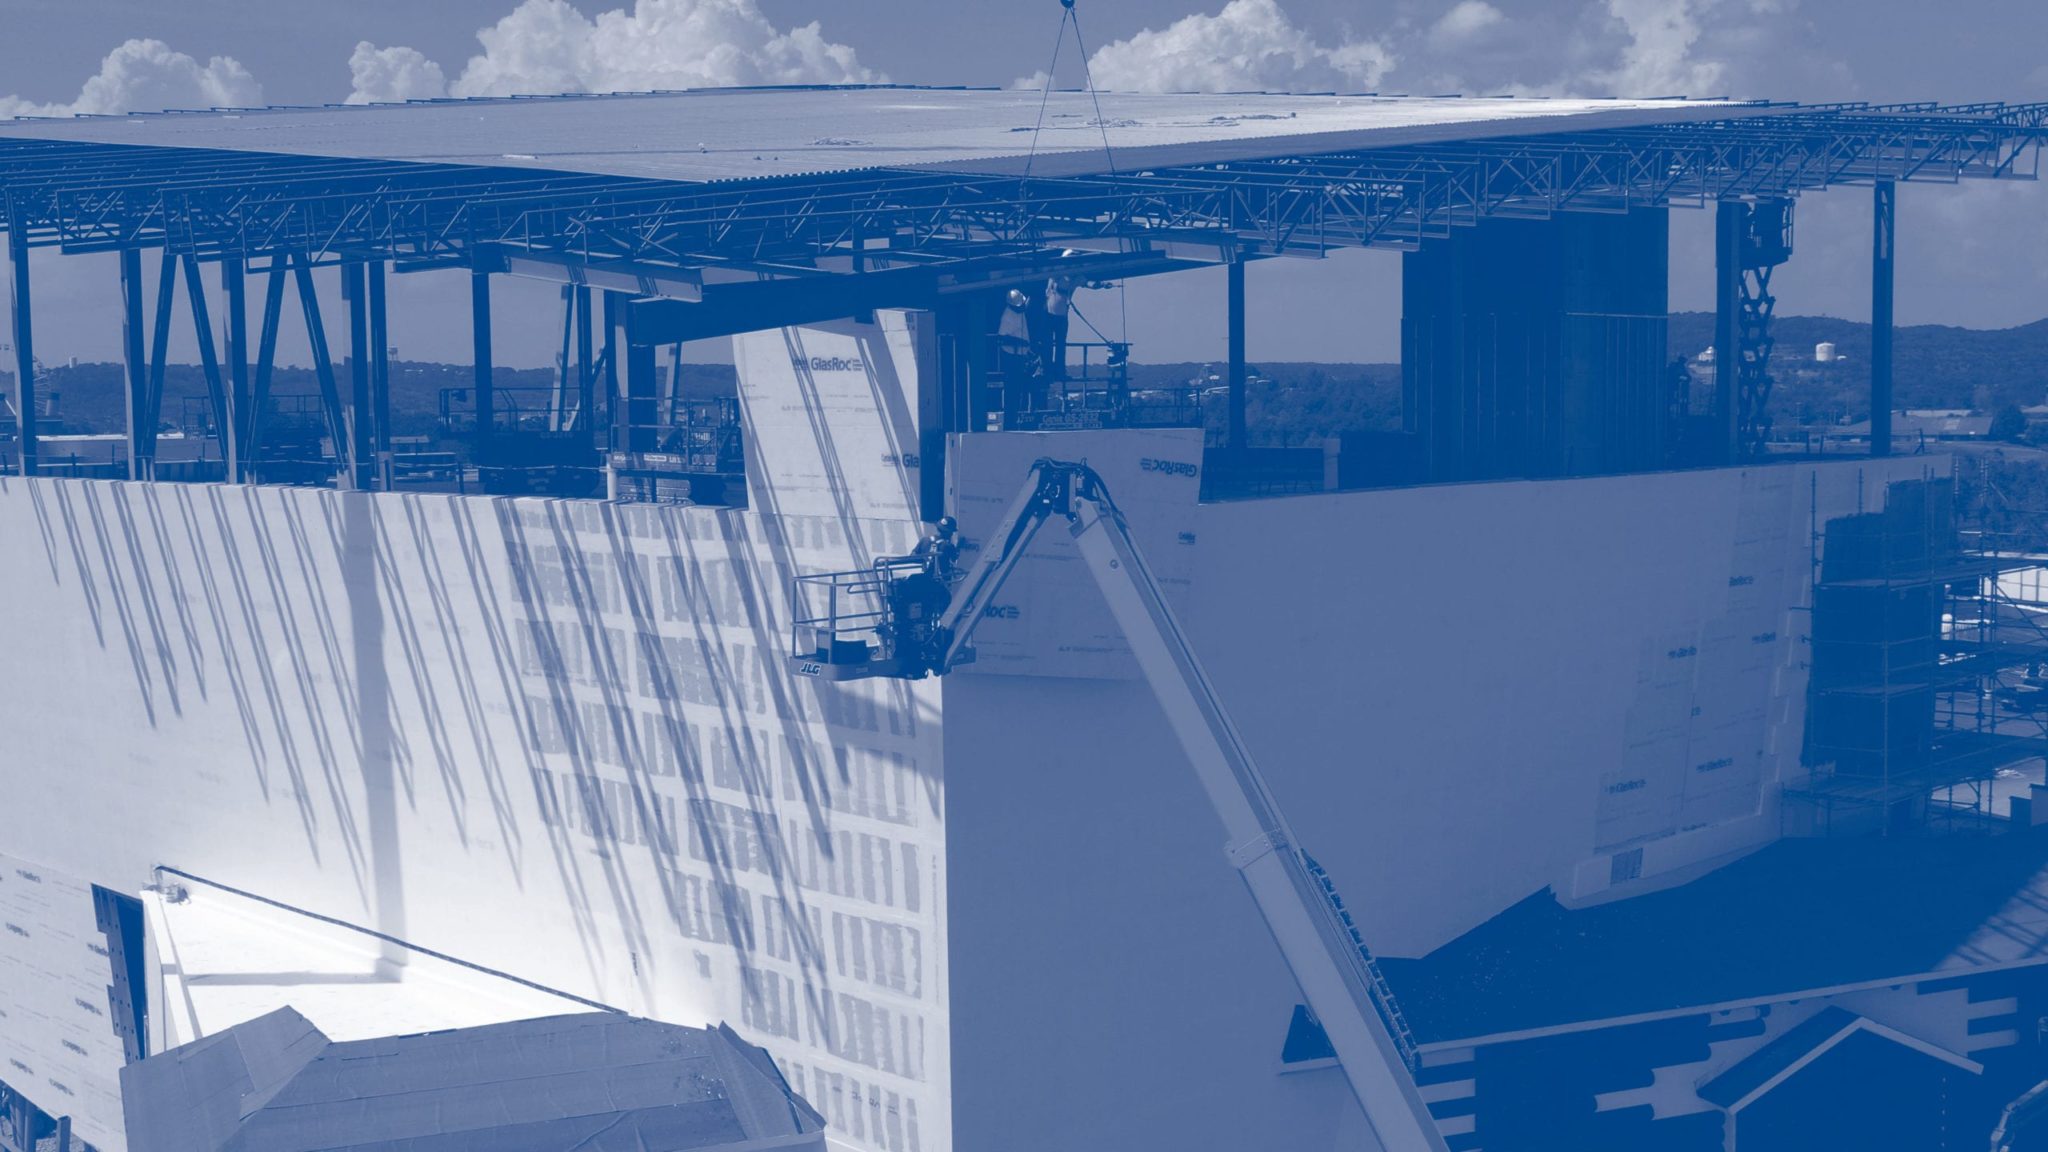 Metal panelization of Wonderworks building with blue duotone